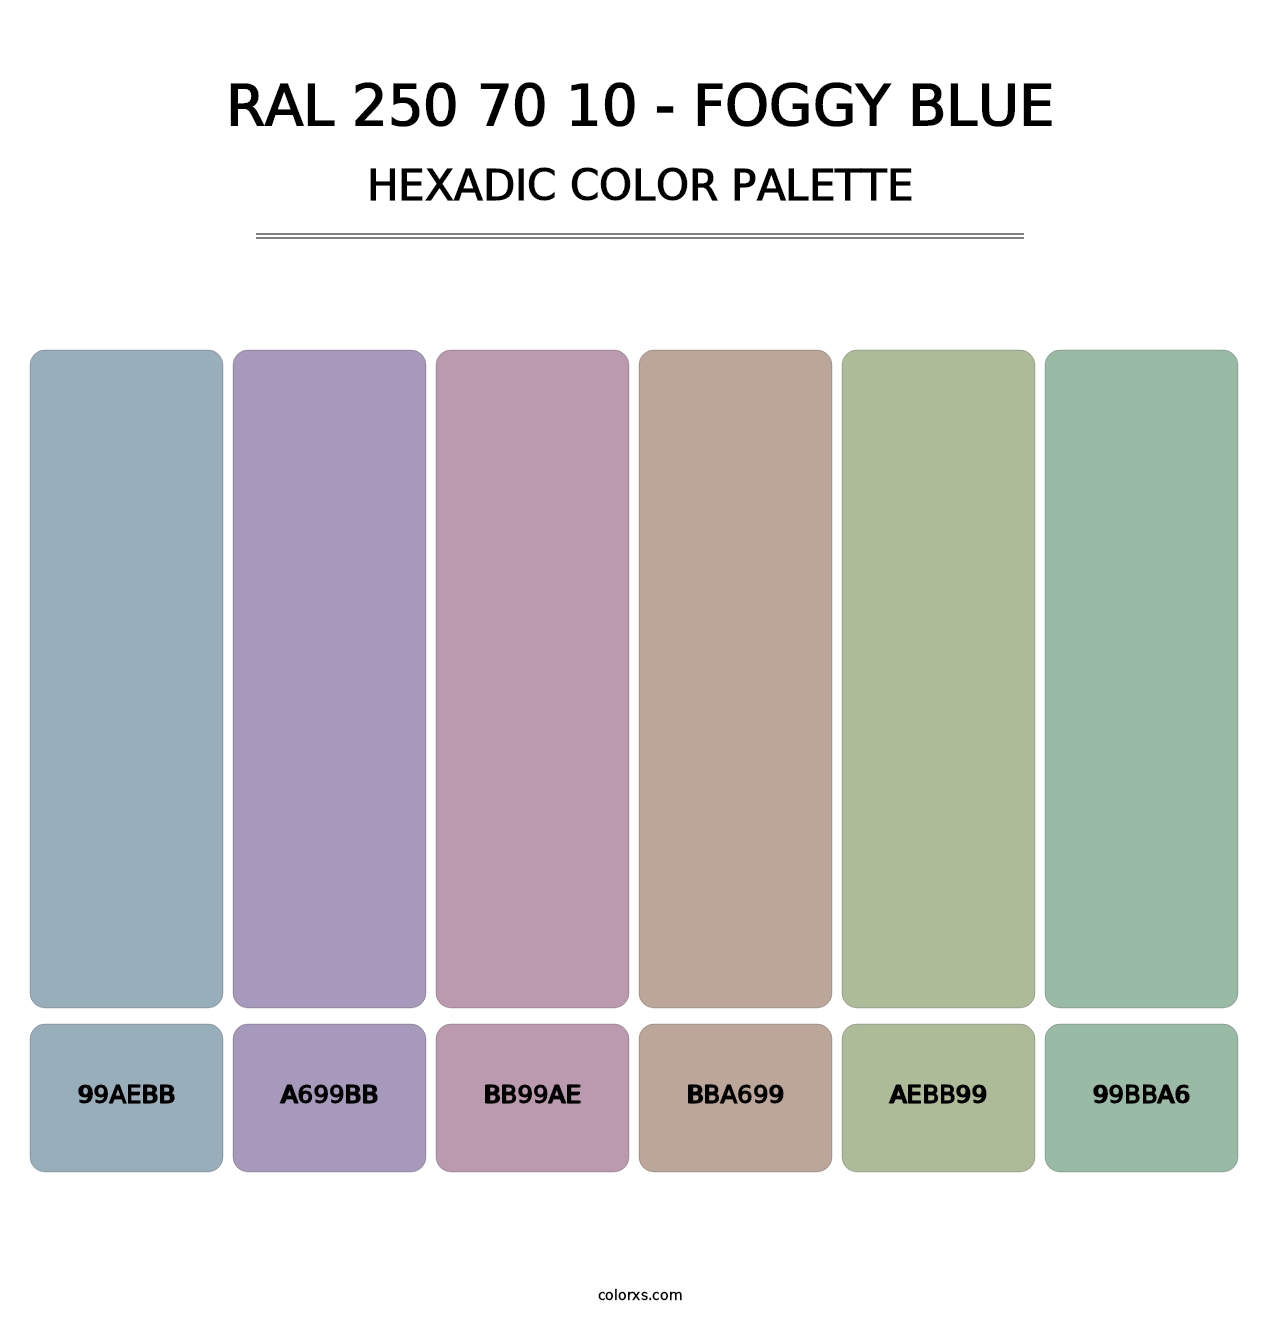 RAL 250 70 10 - Foggy Blue - Hexadic Color Palette